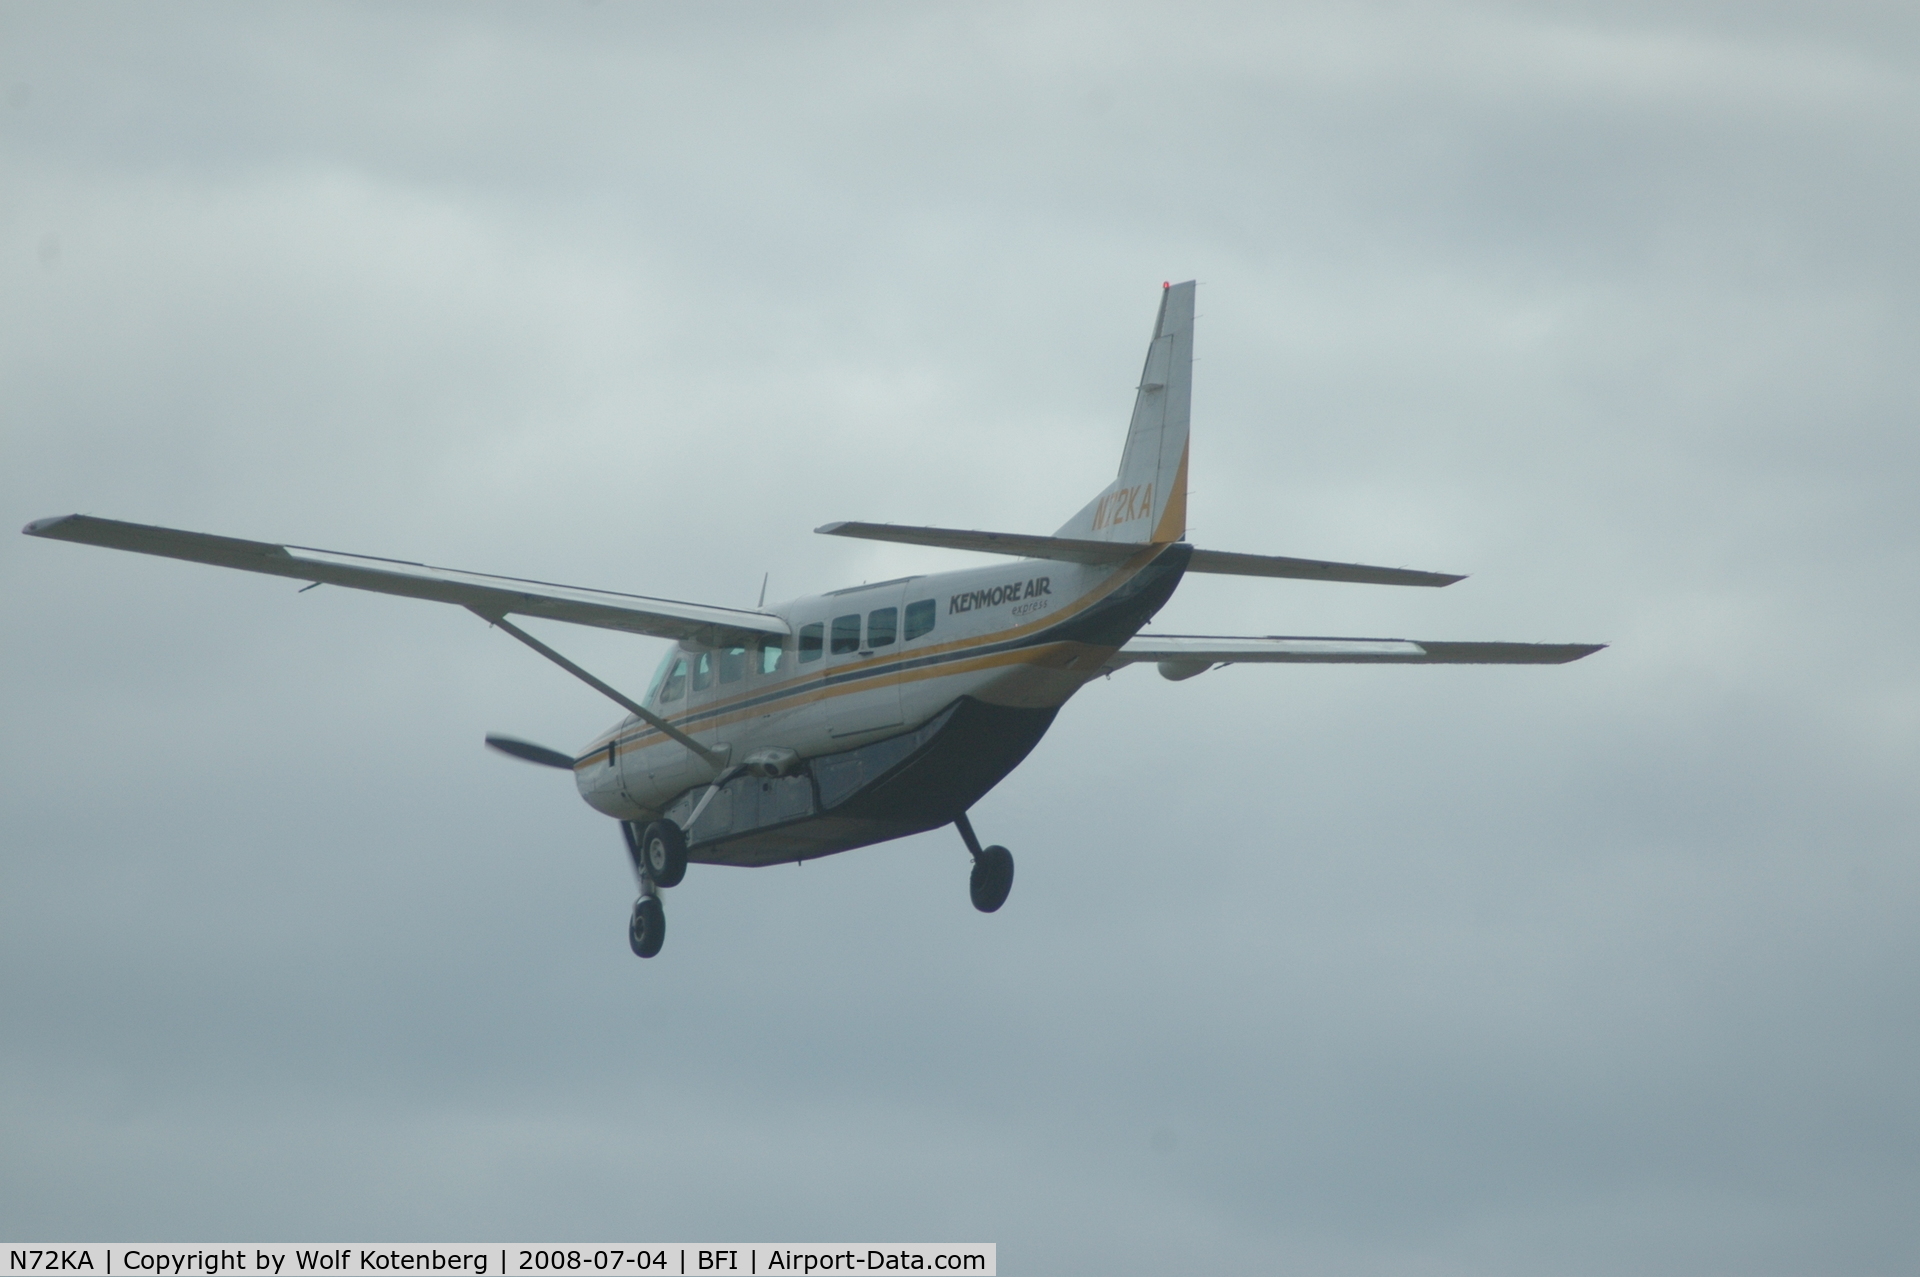 N72KA, 1992 Cessna 208B C/N 208B0326, seconds from touchdown